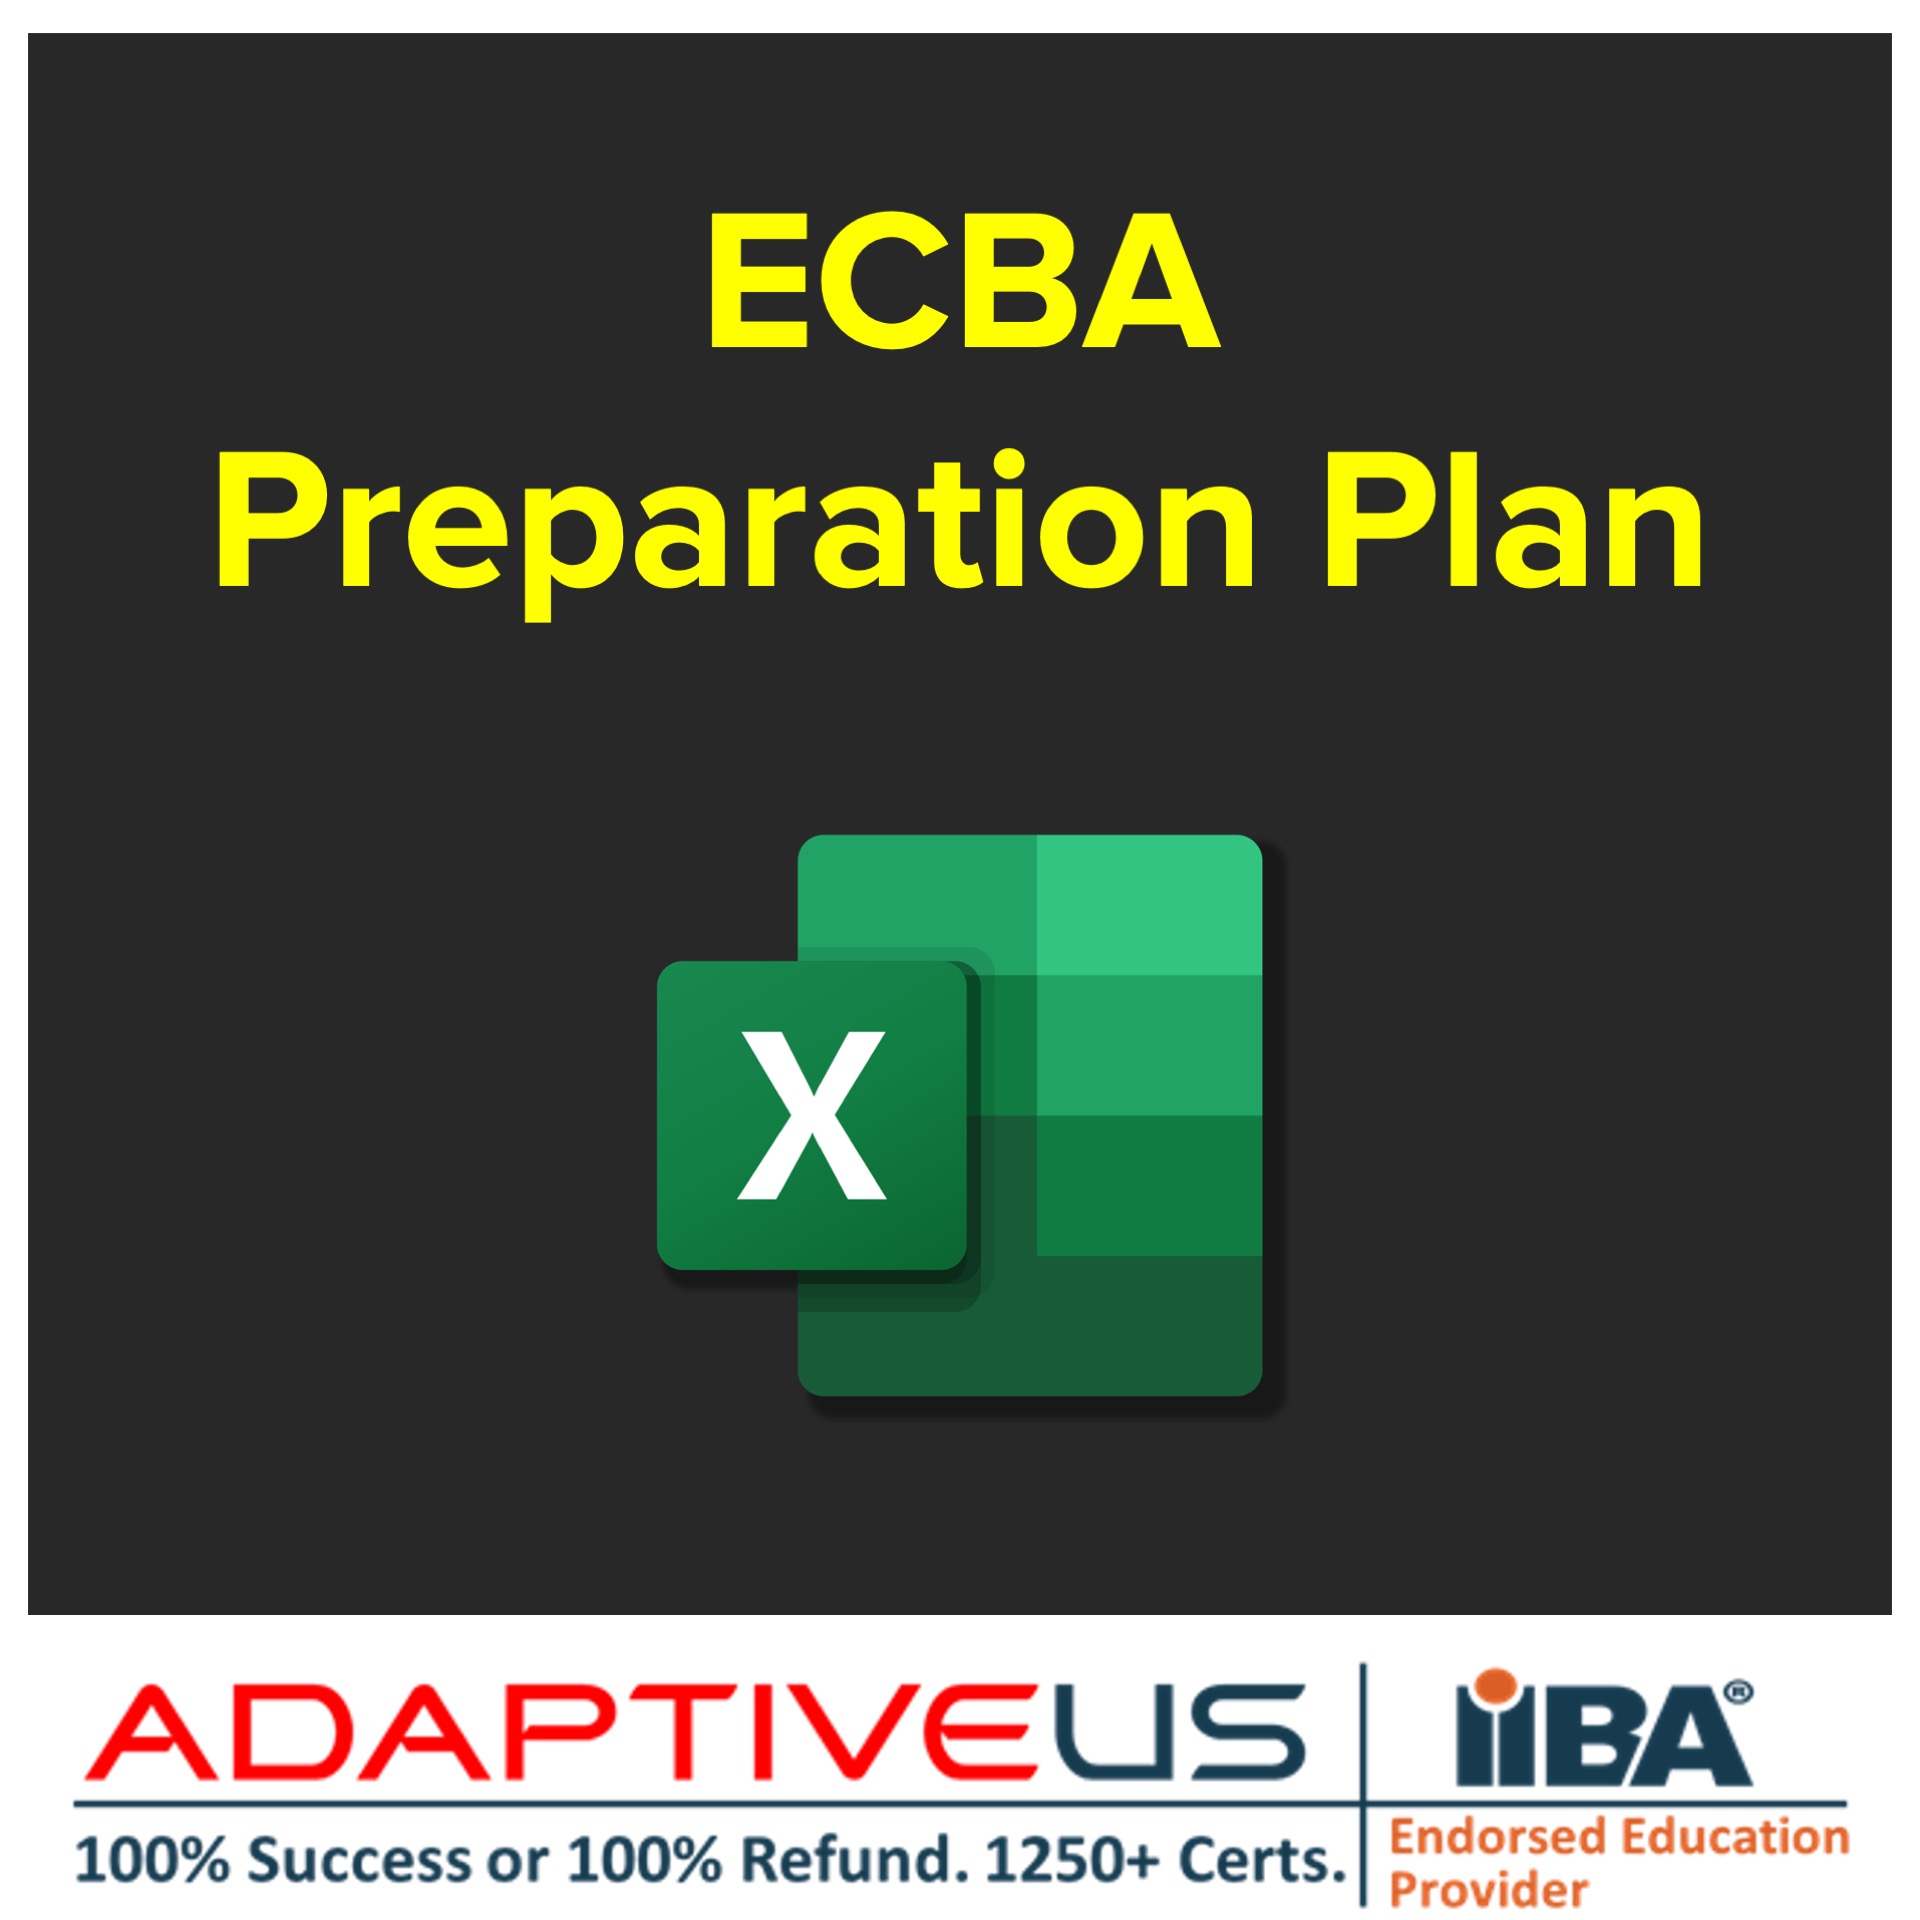 ECBA Prep Plan Template